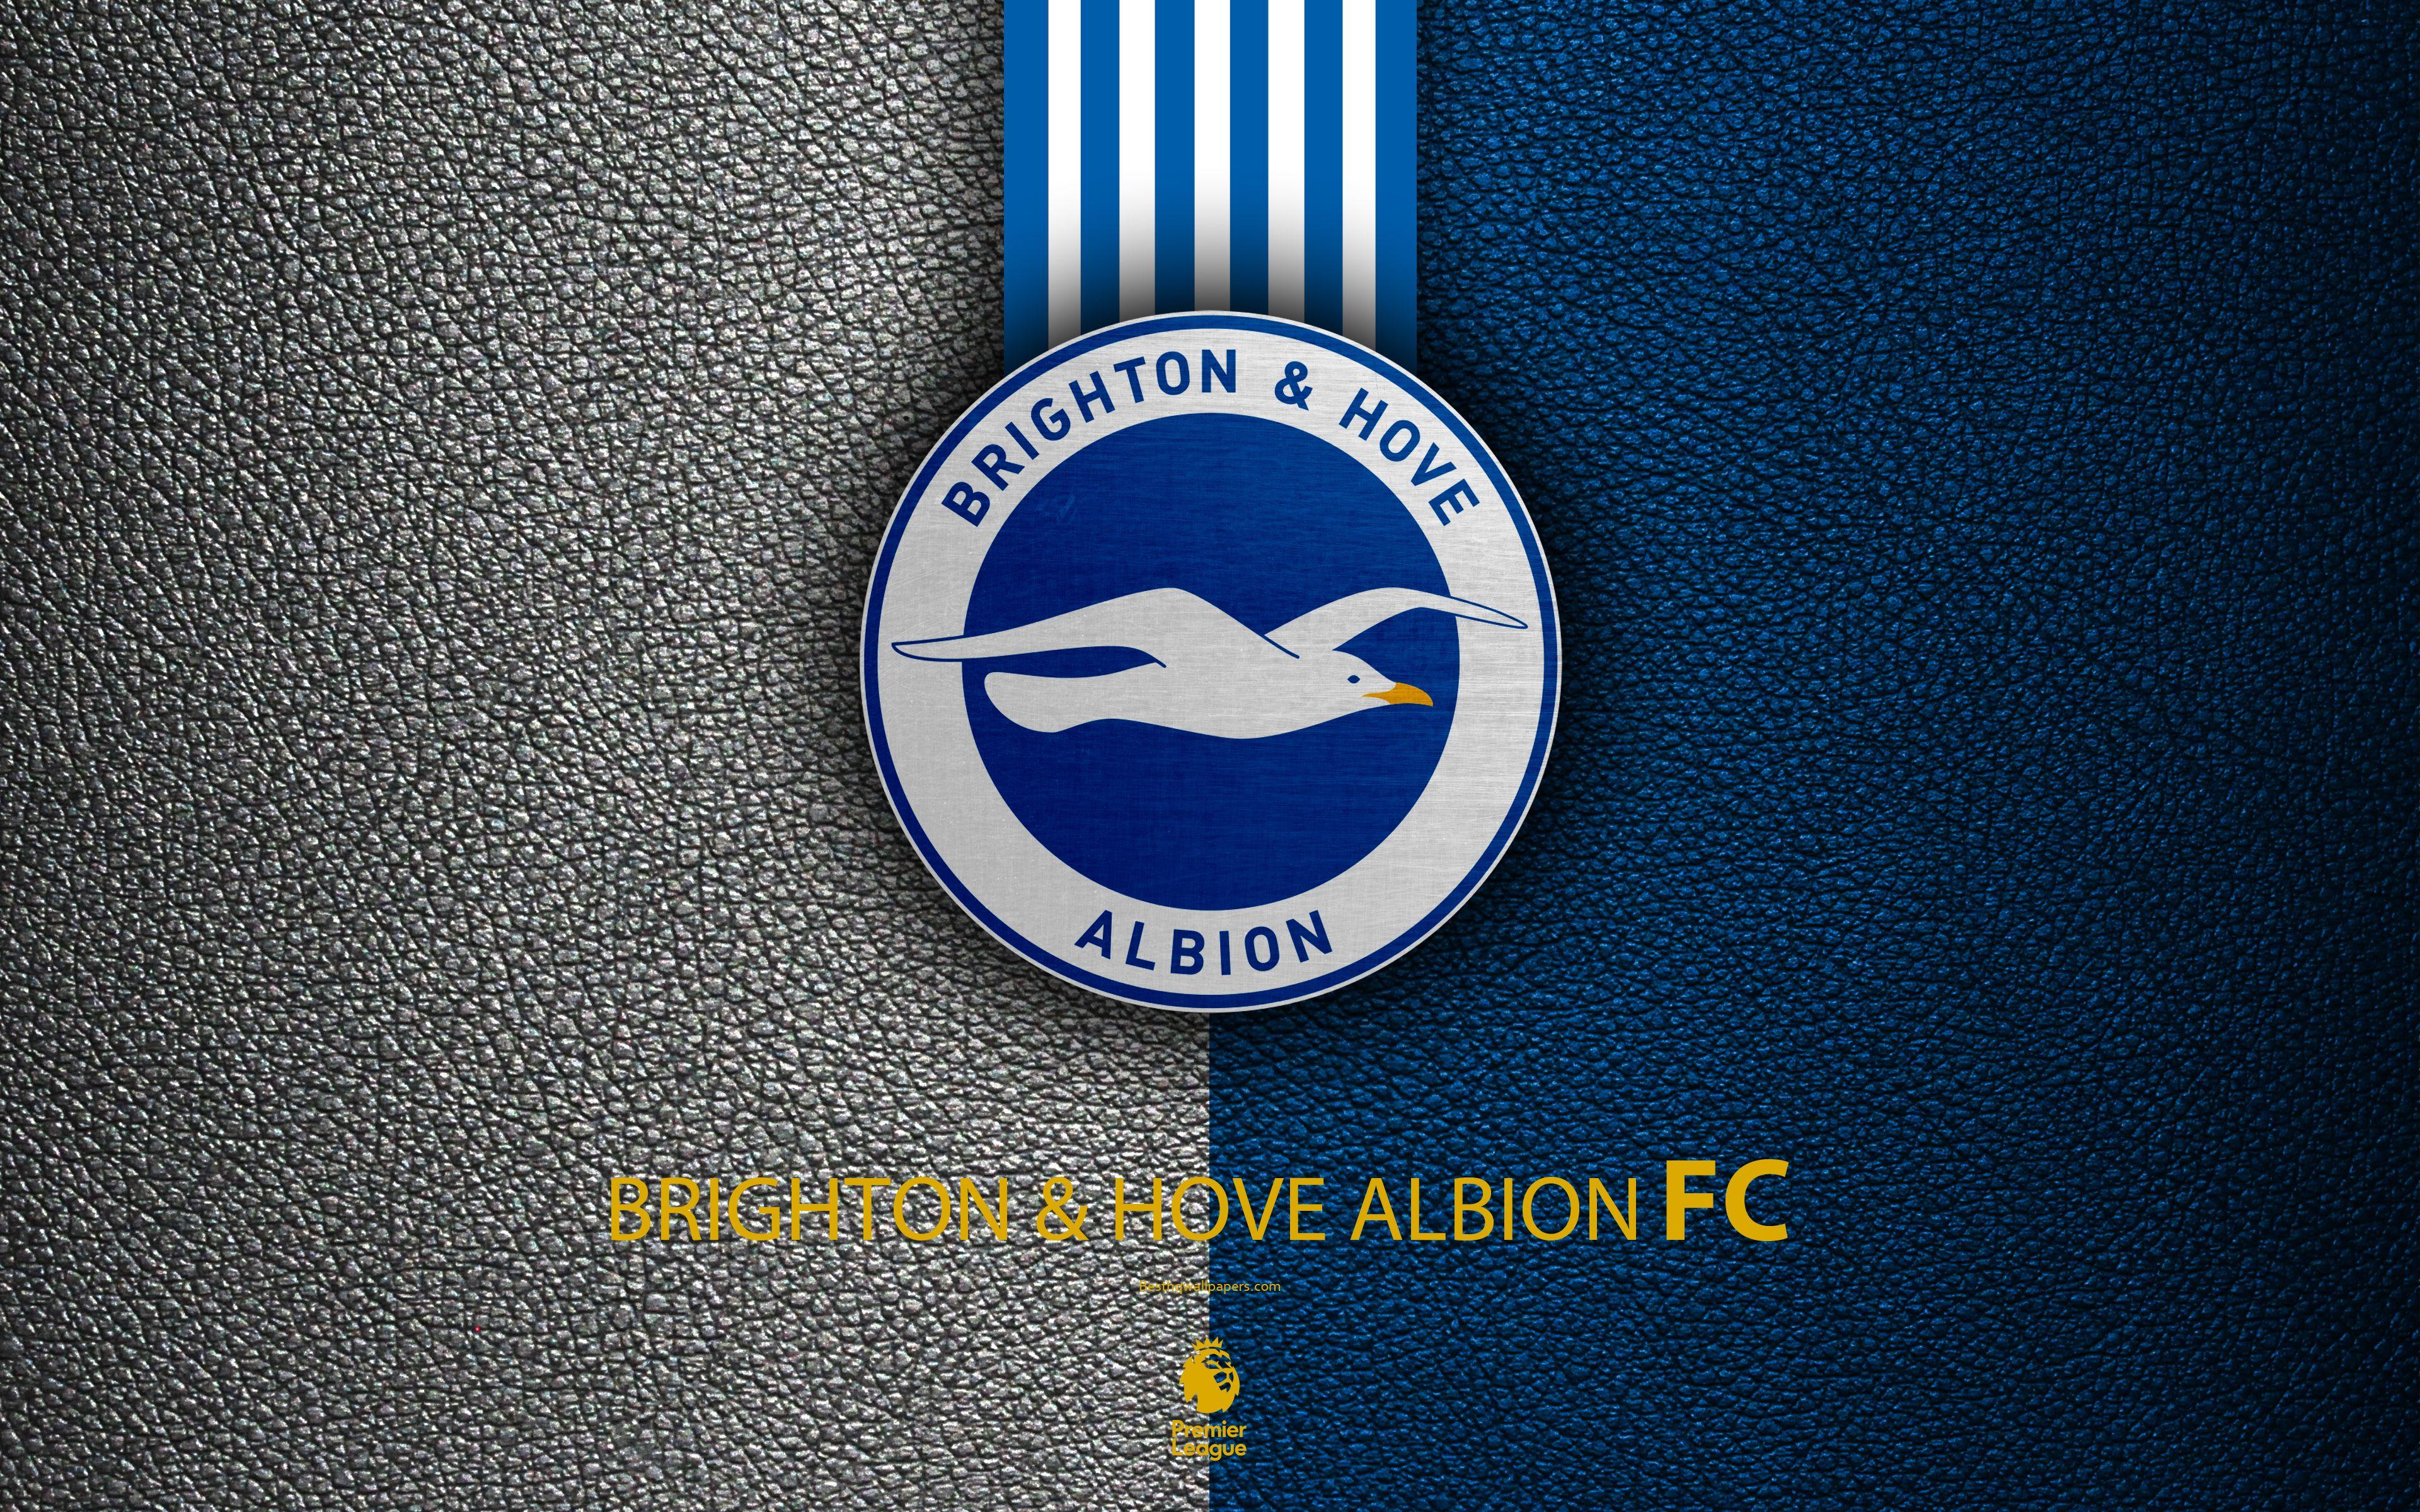 Download wallpaper Brighton and Hove Albion FC, 4k, English